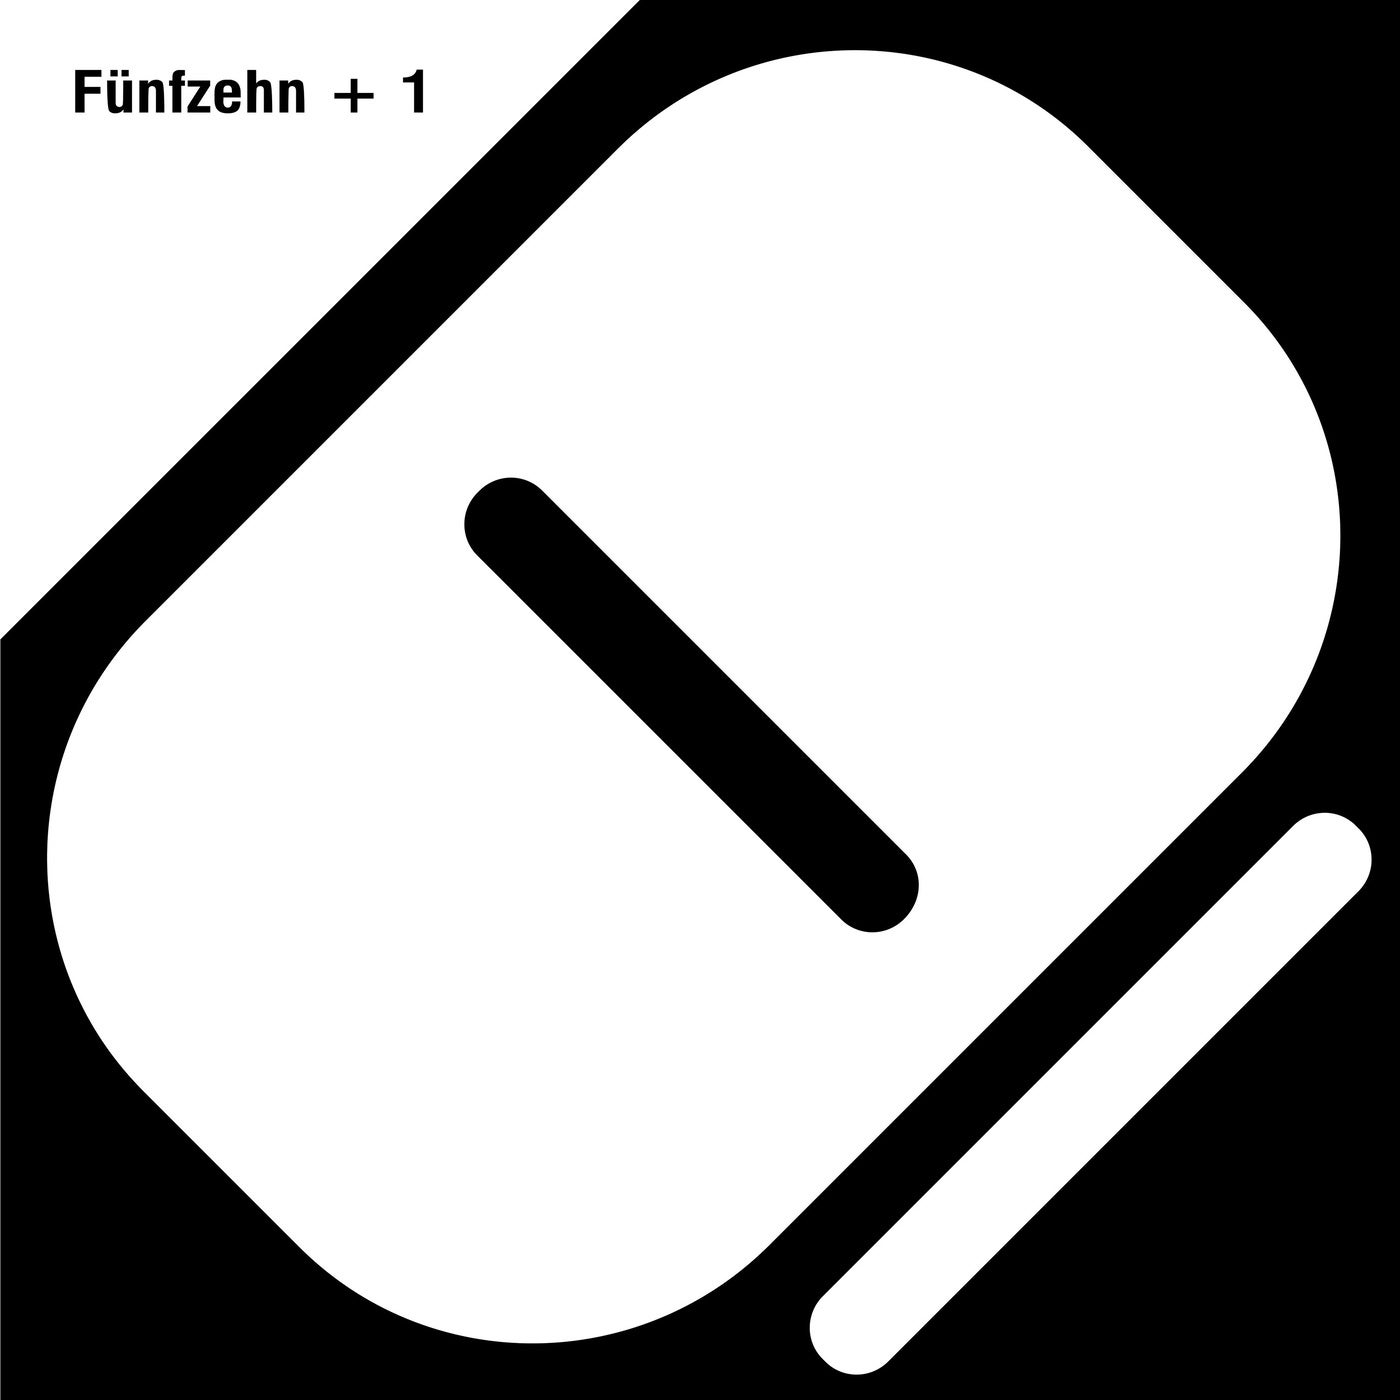 Download Ostgut Ton Funfzehn + 1 on Electrobuzz